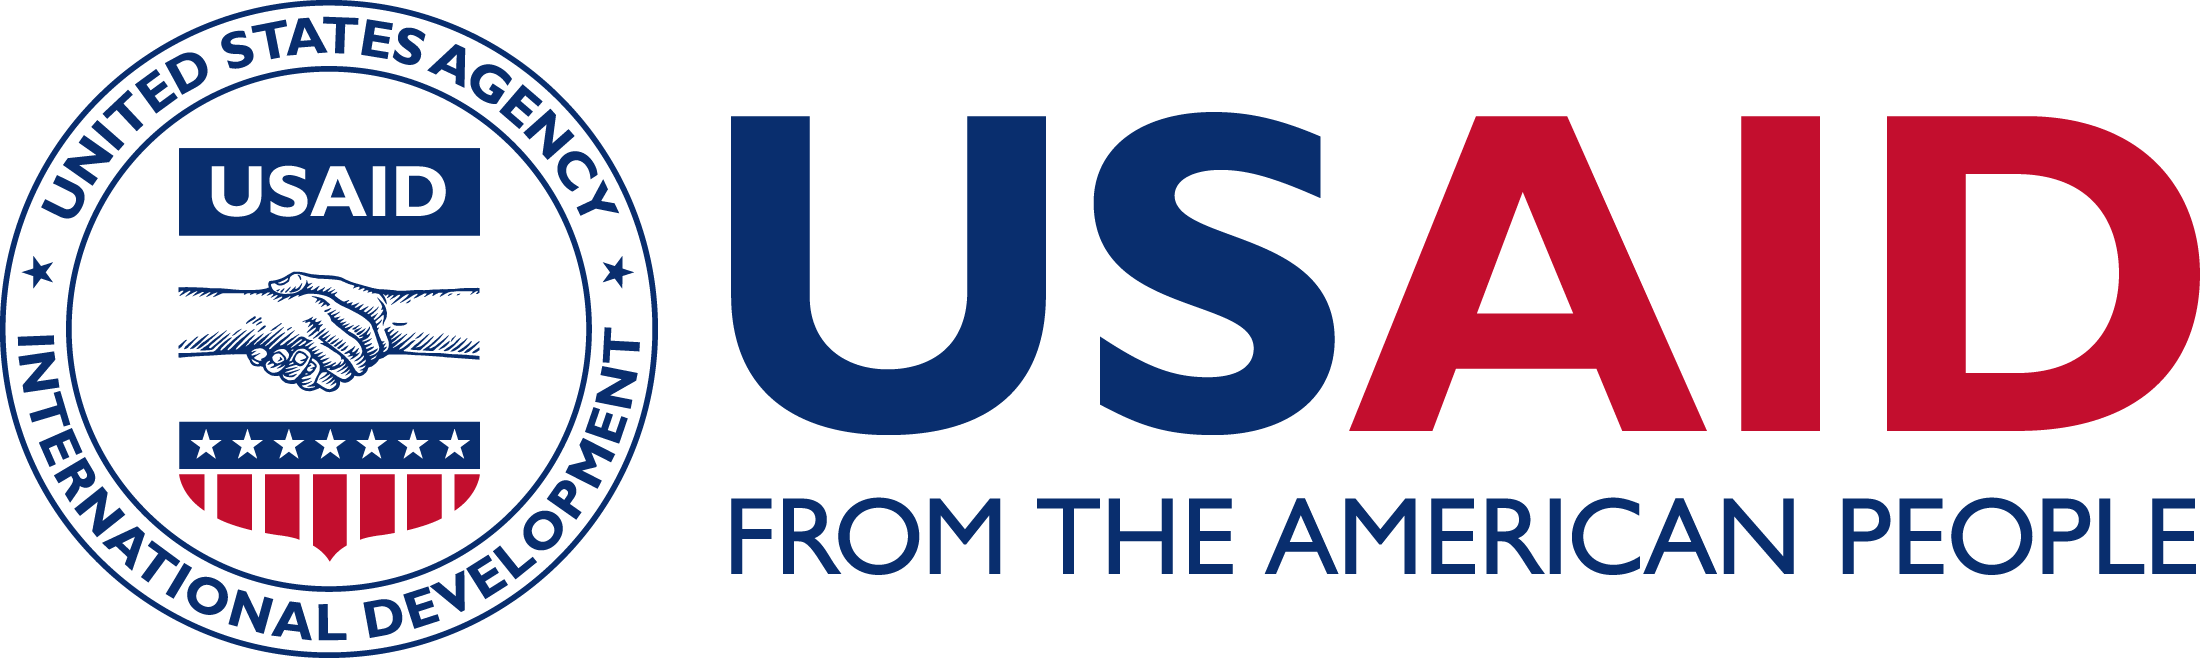 United States Agensy for International Development (USAID)